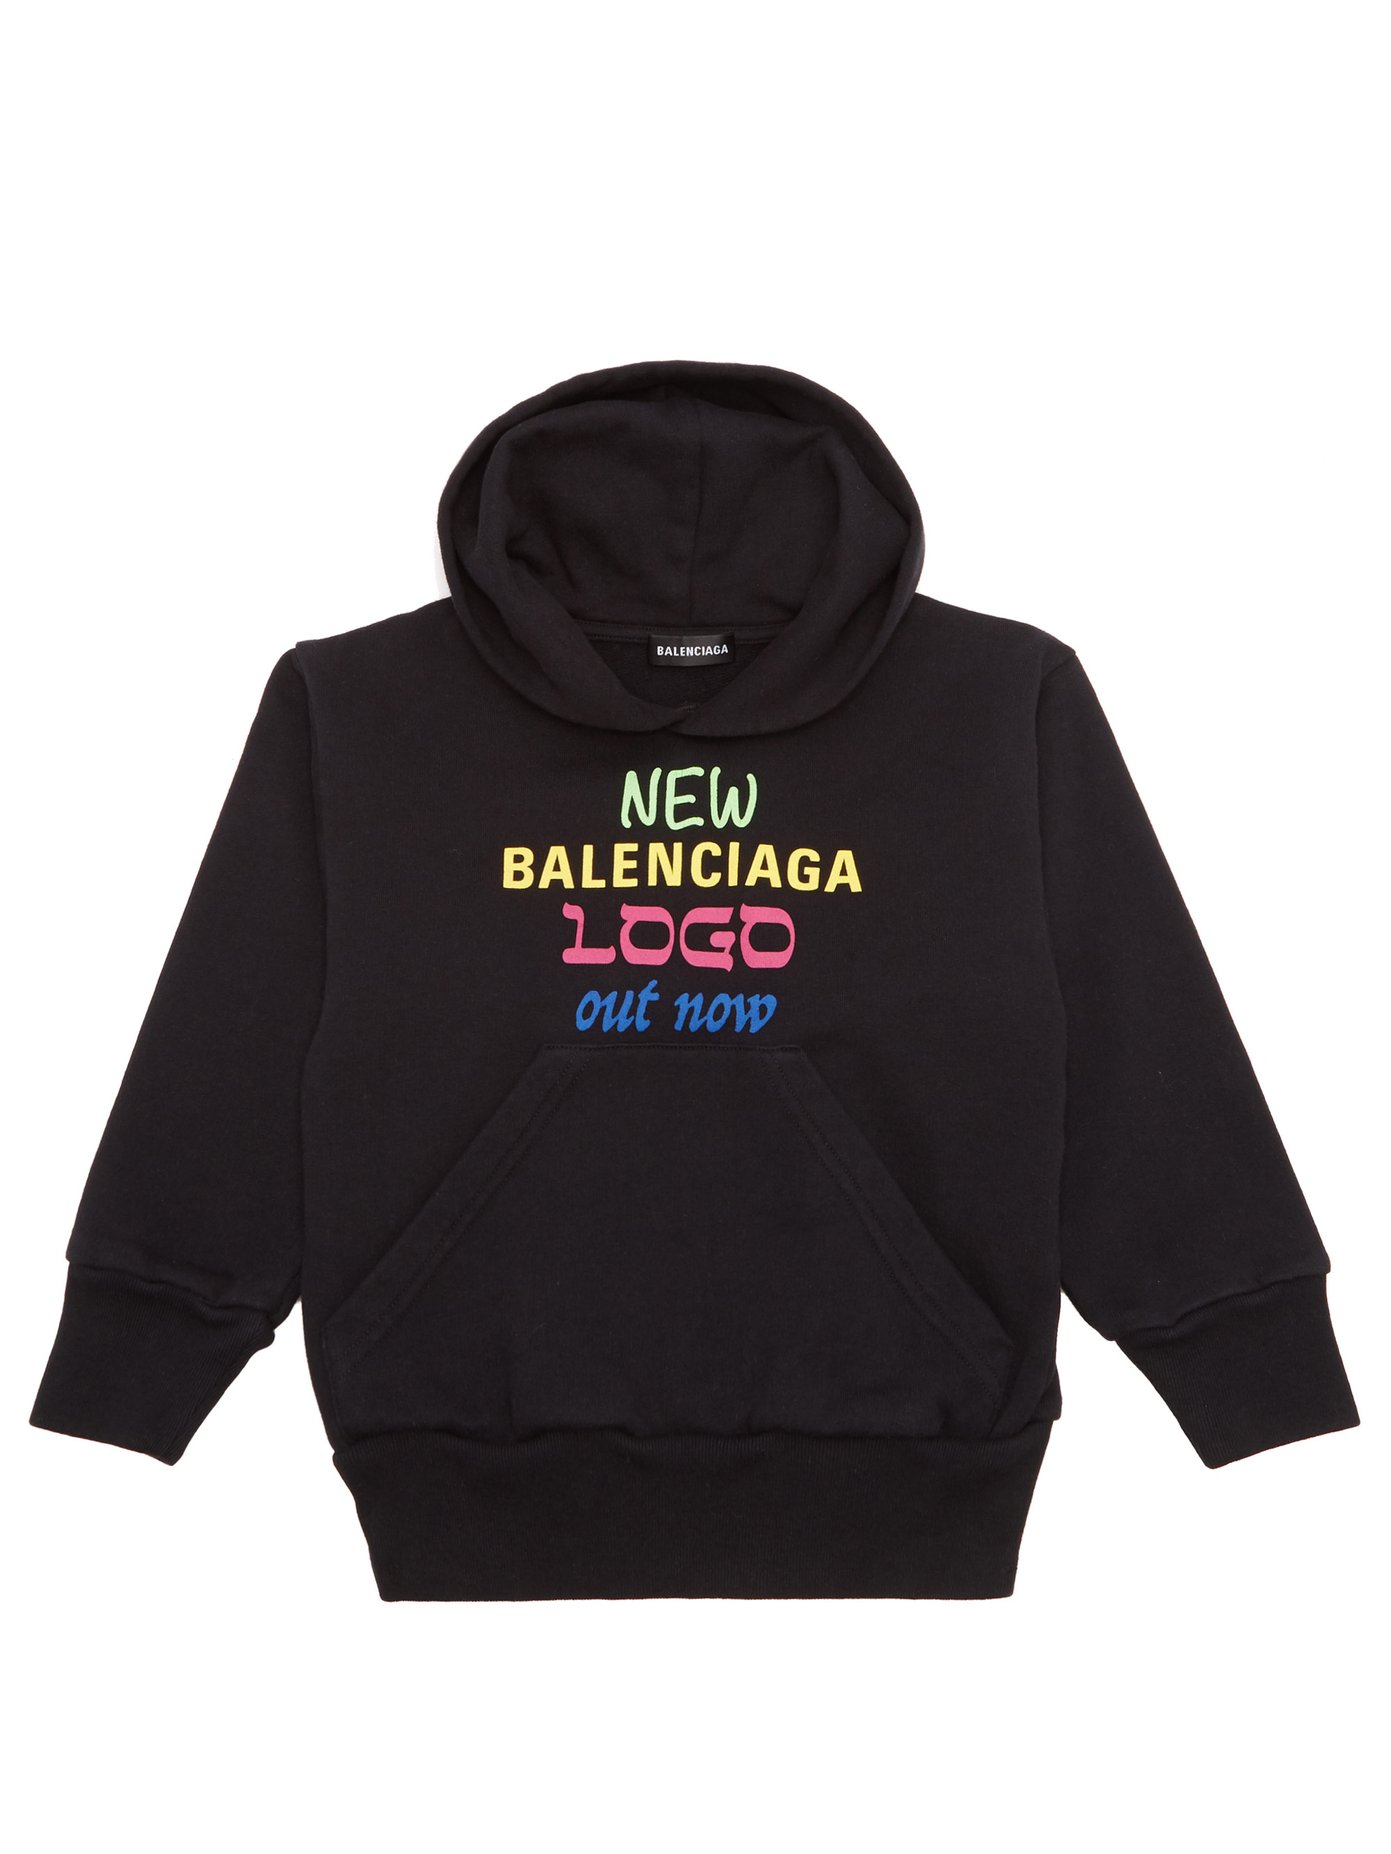 balenciaga new logo out now hoodie